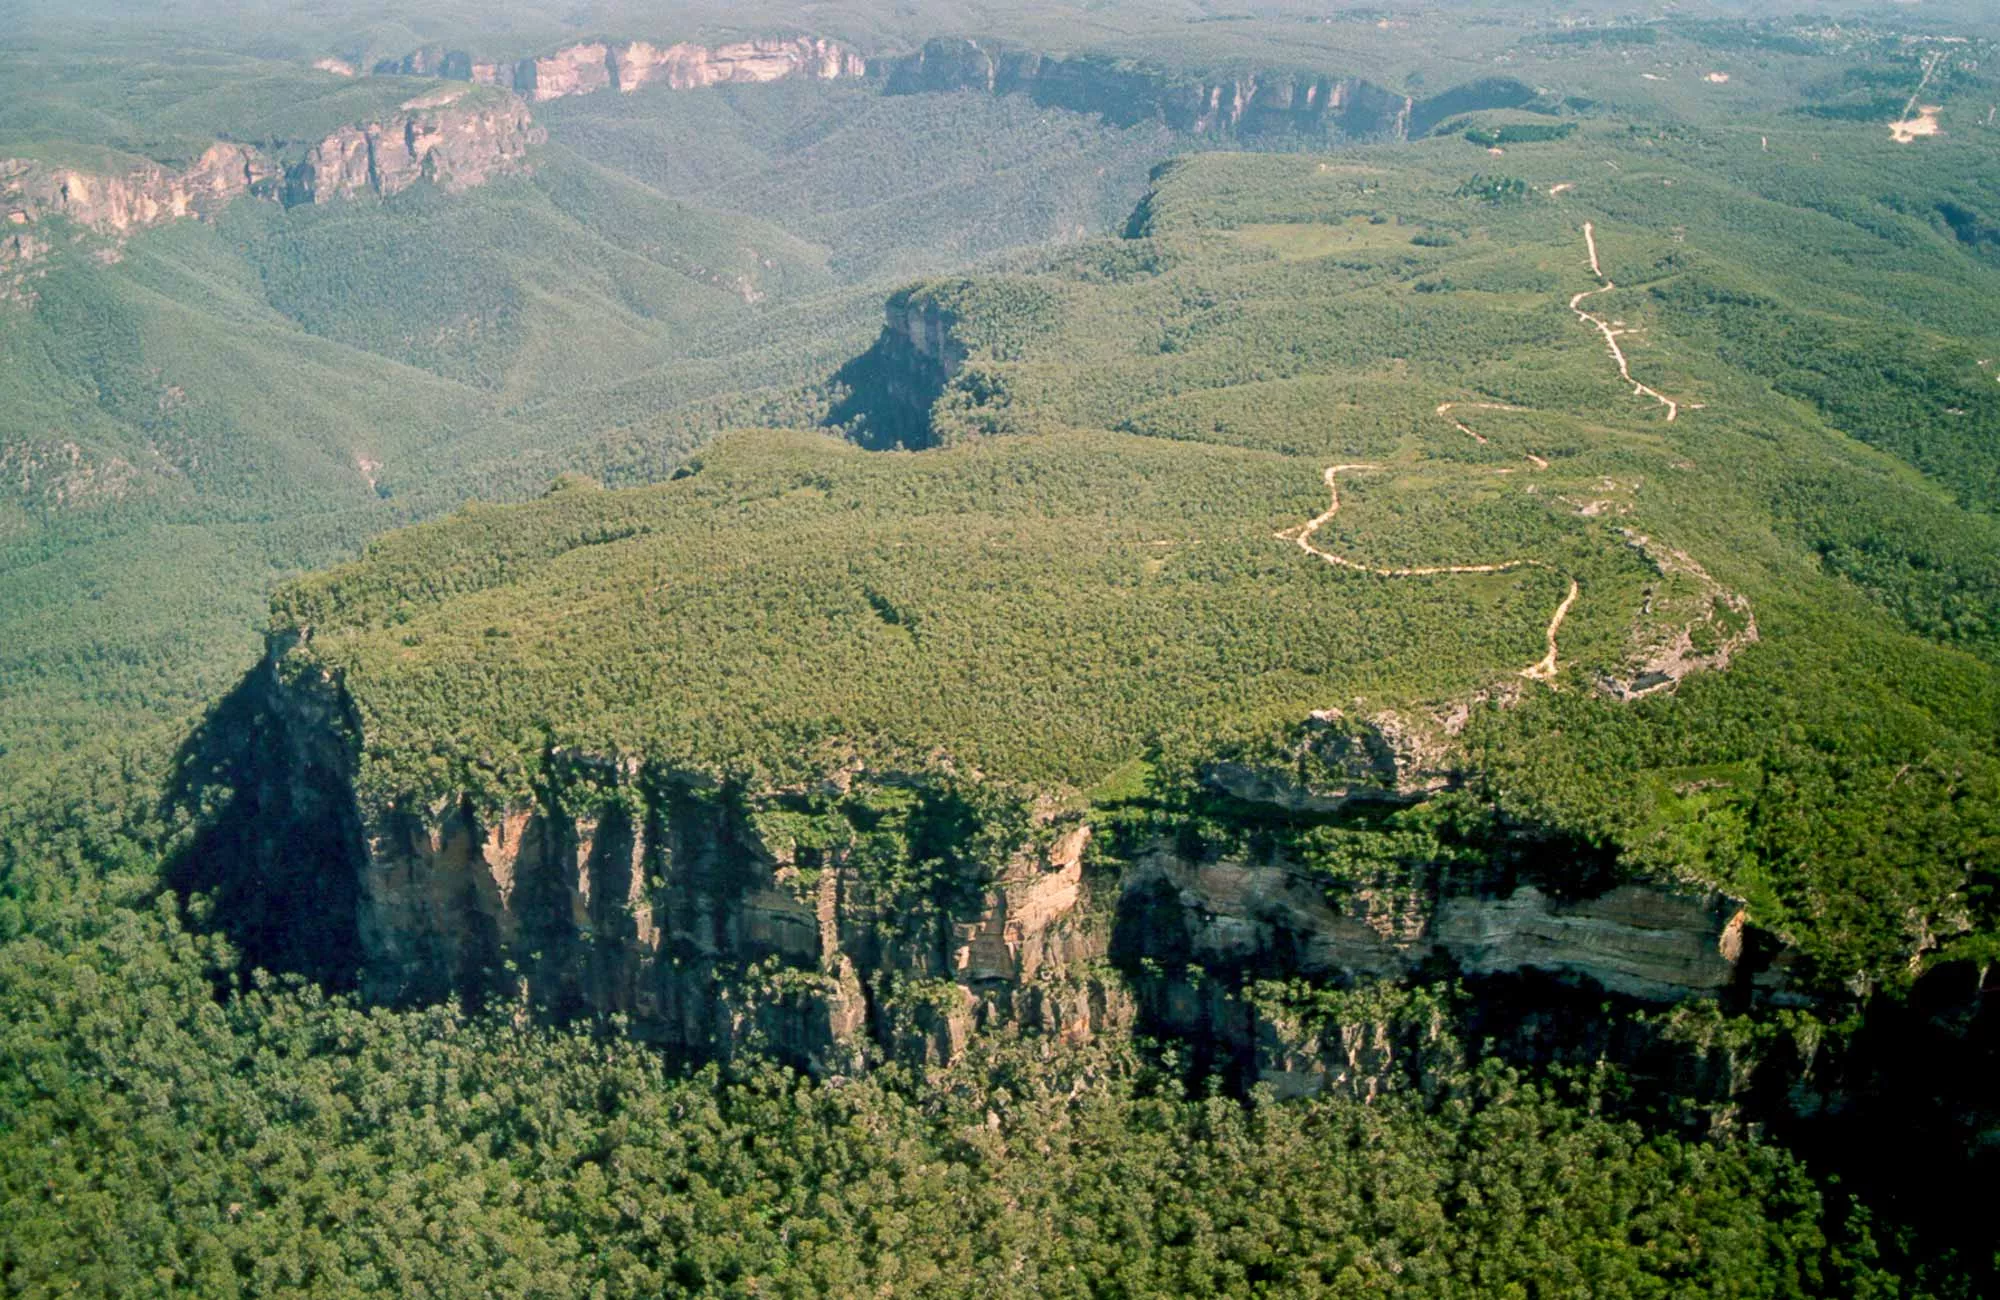 Blue Gum Forest in Australia, Australia and Oceania | Trekking & Hiking - Rated 0.7